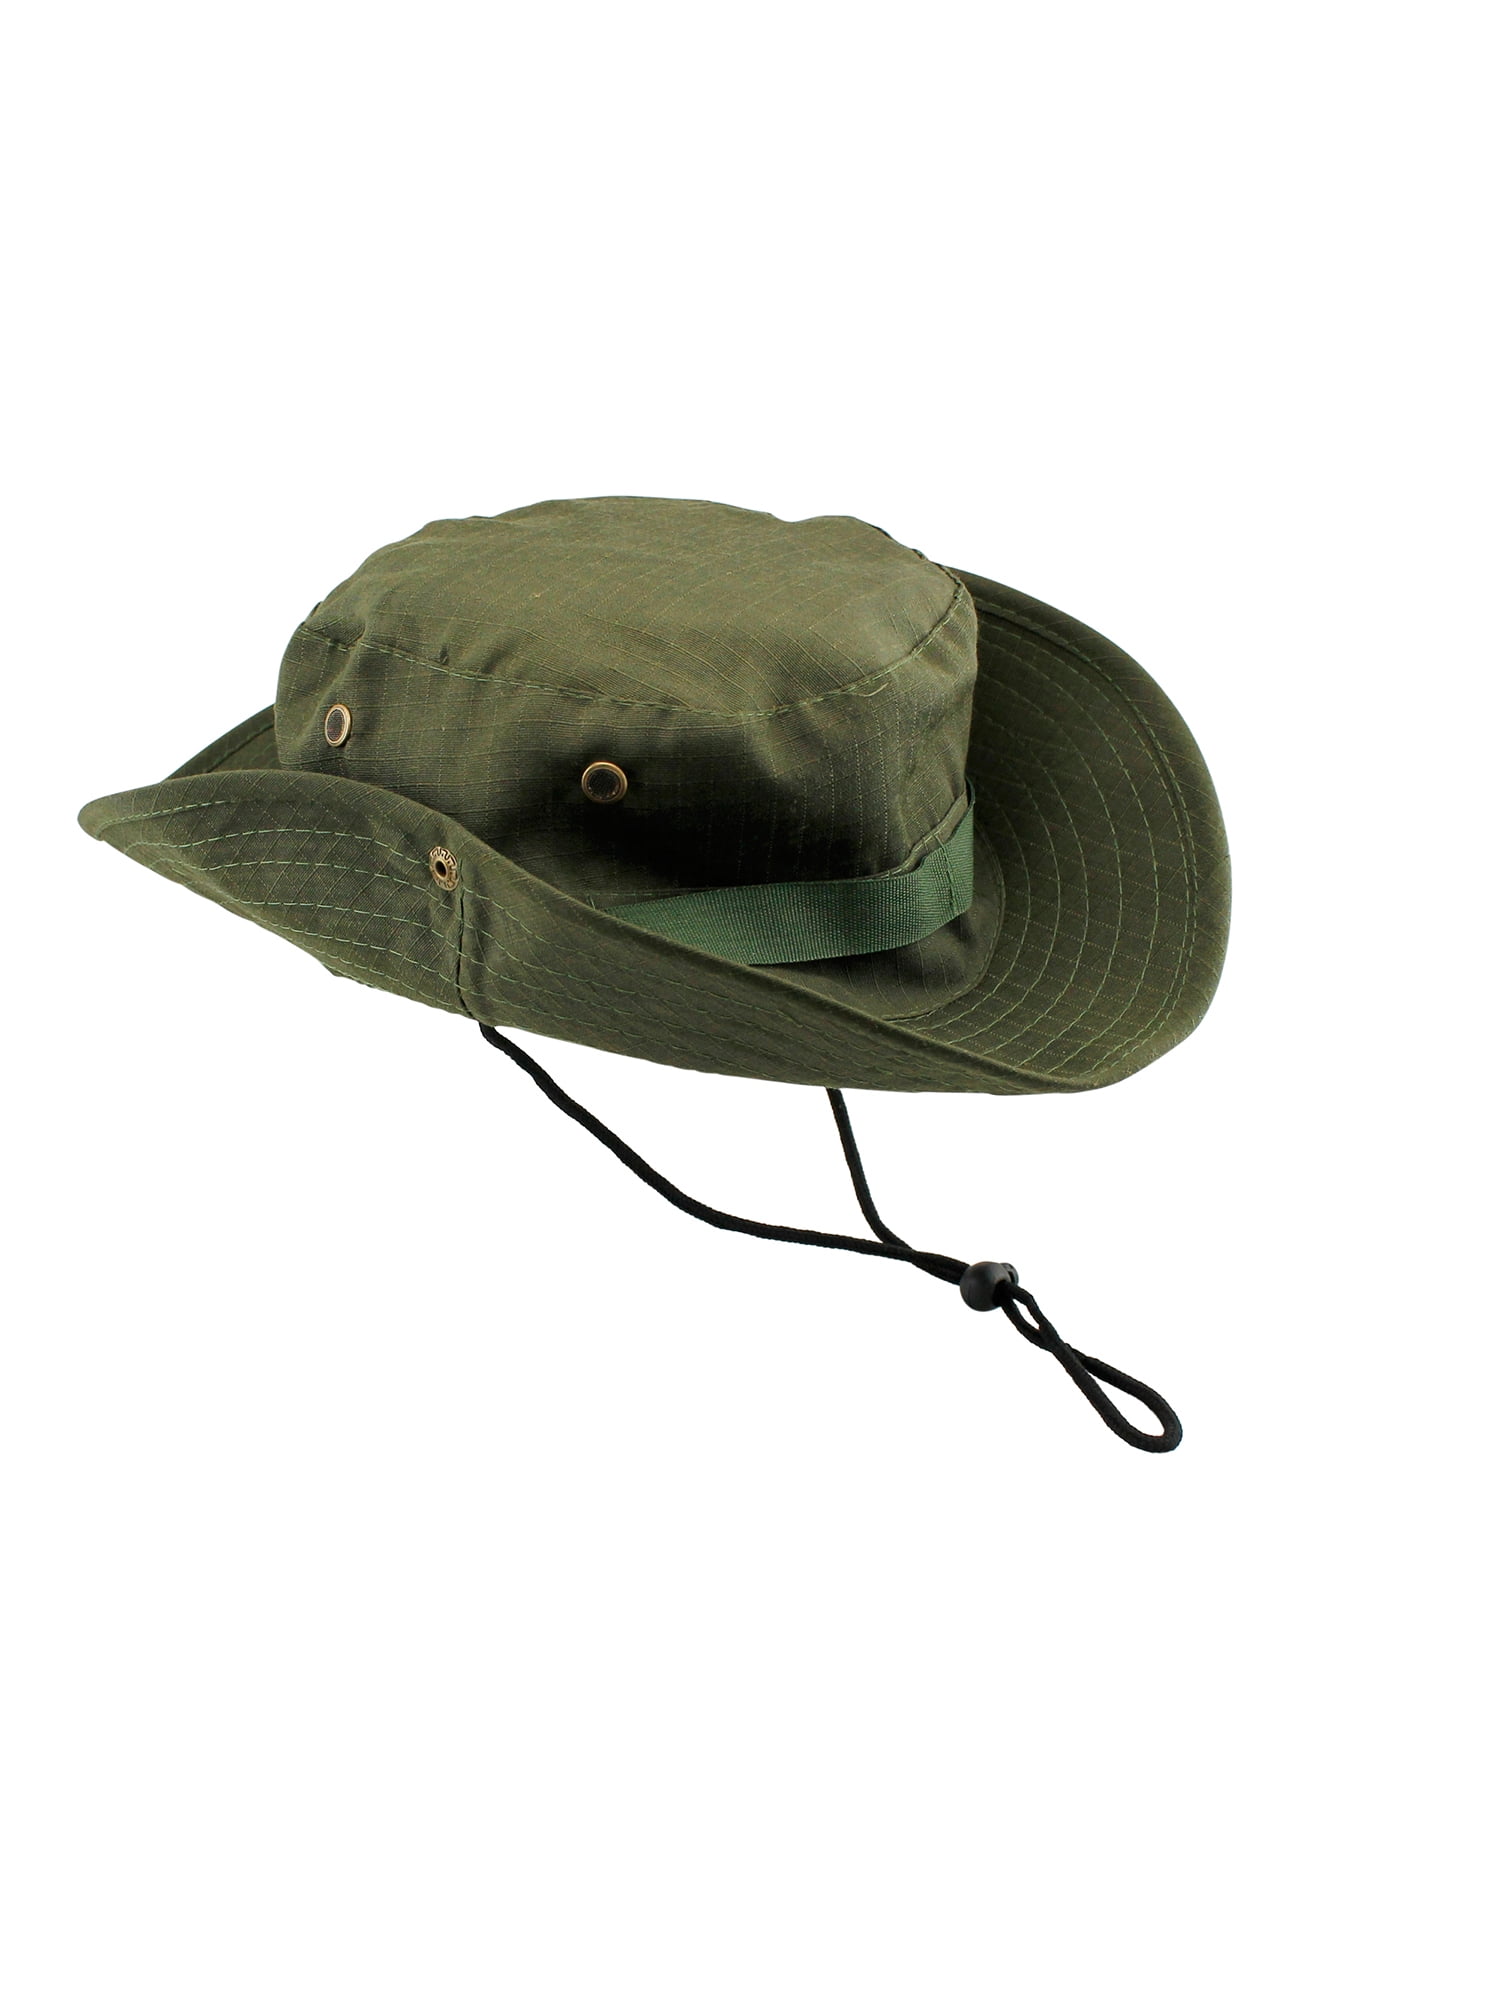 Bucket Hat Cap Fishing Boonie Wide Brim Charcoal Safari Summer Unisex 100%Cotton 